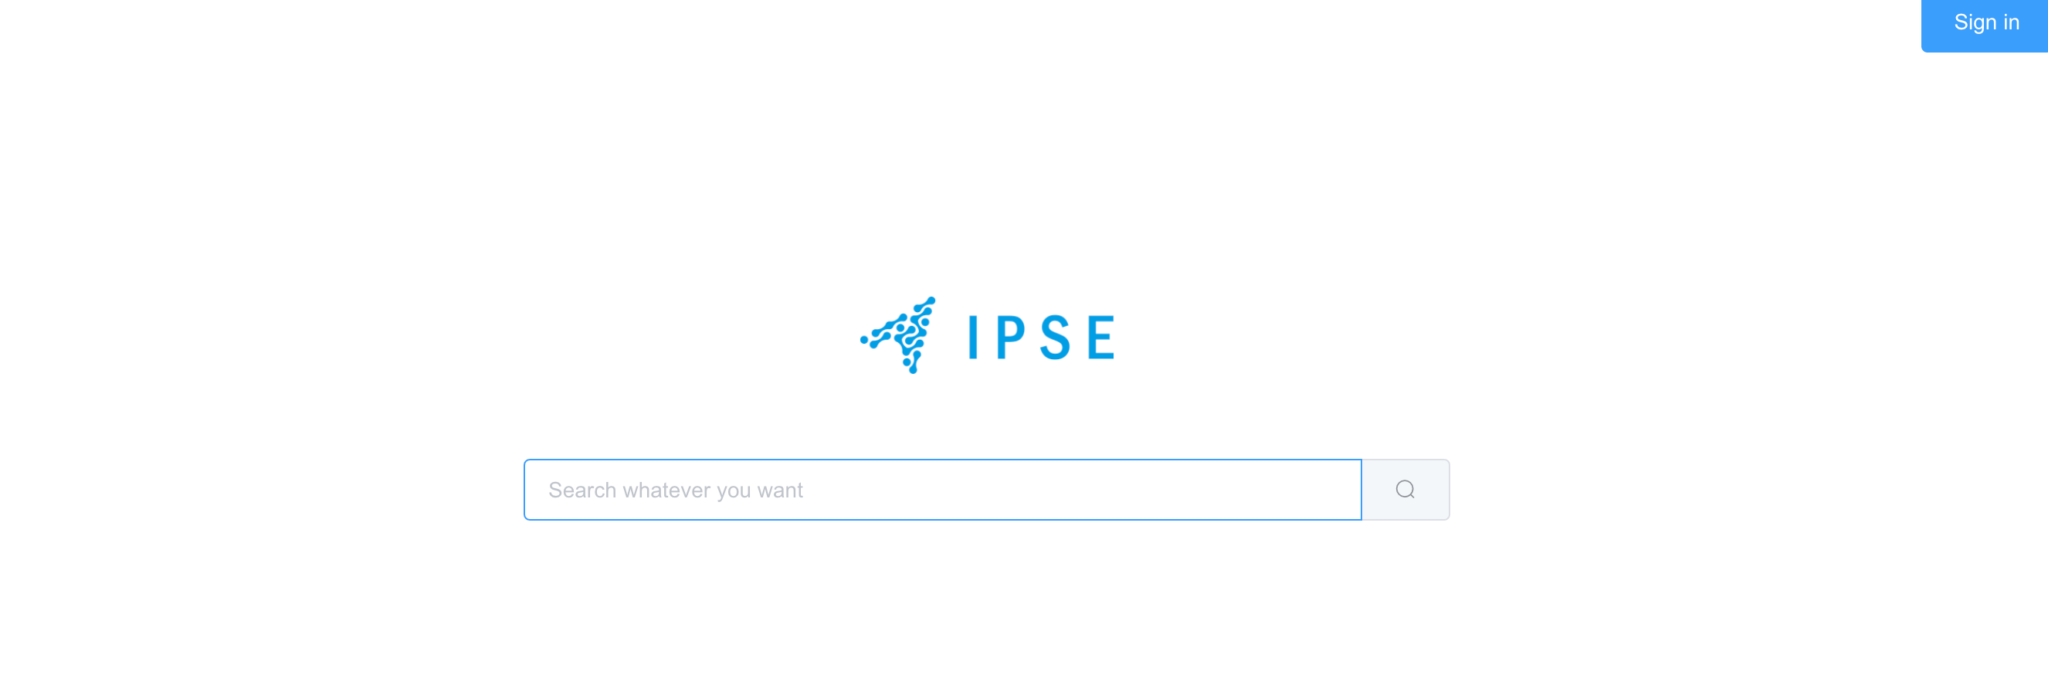 IPSE Startbildschirm